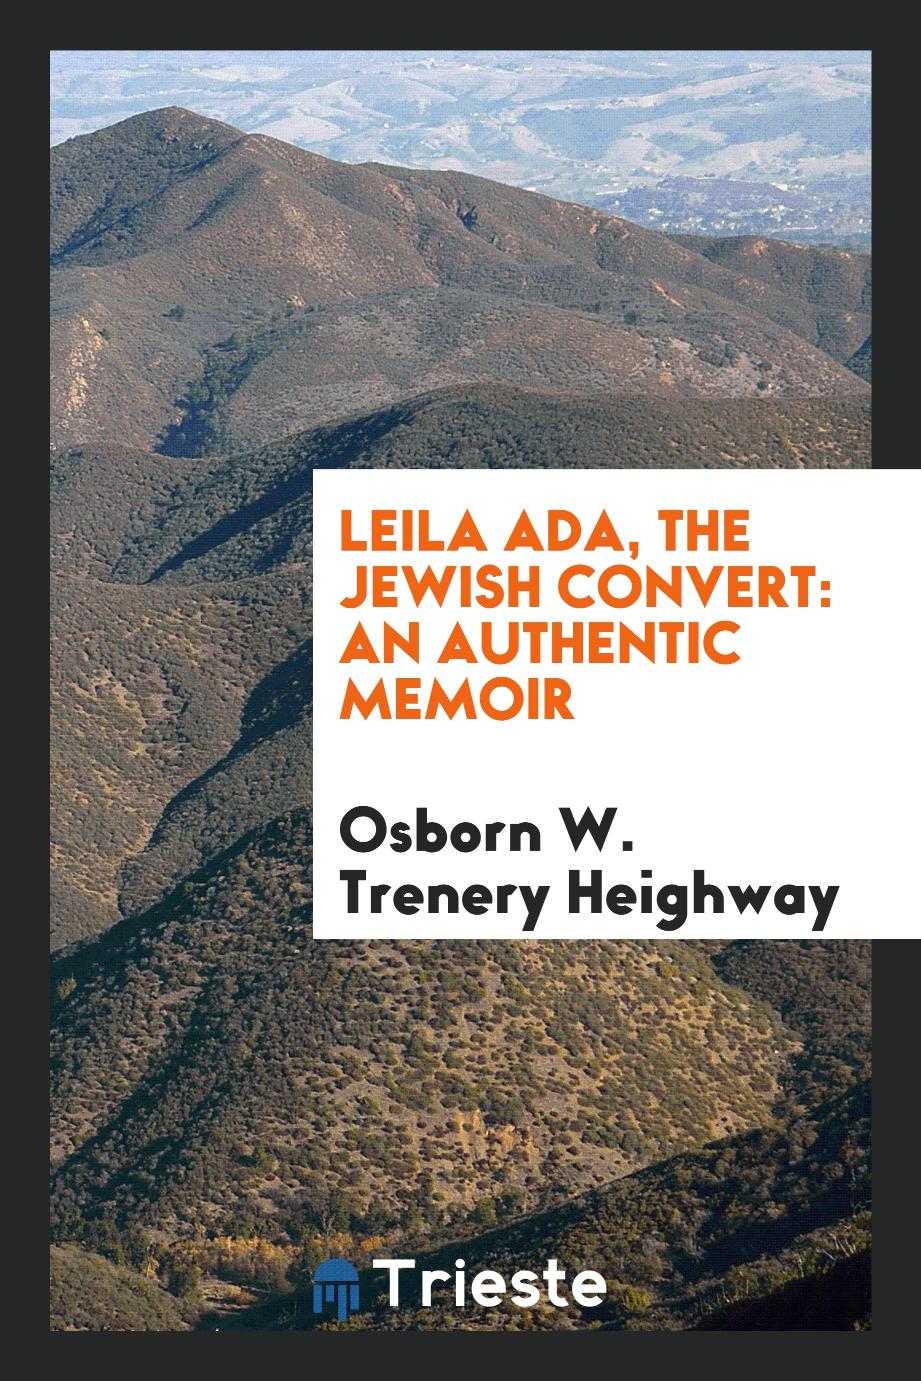 Leila Ada, the Jewish convert: an authentic memoir